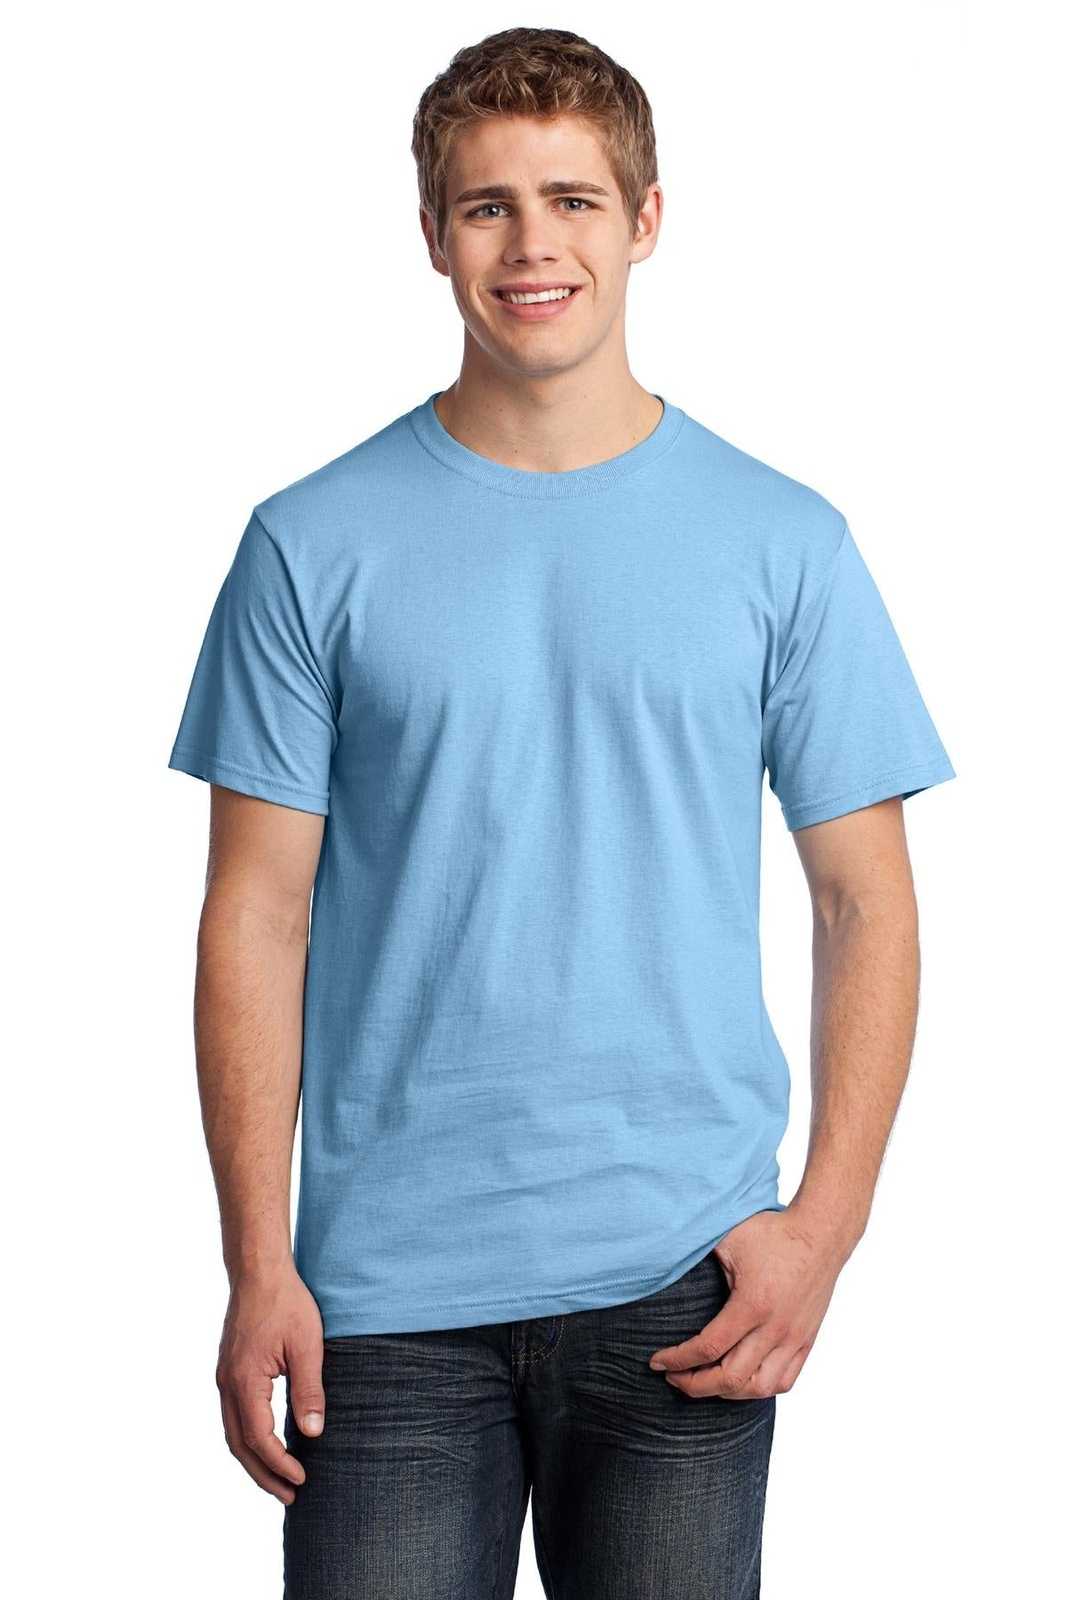 Fruit of the Loom 3930 HD Cotton 100% Cotton T-Shirt - Light Blue - HIT a Double